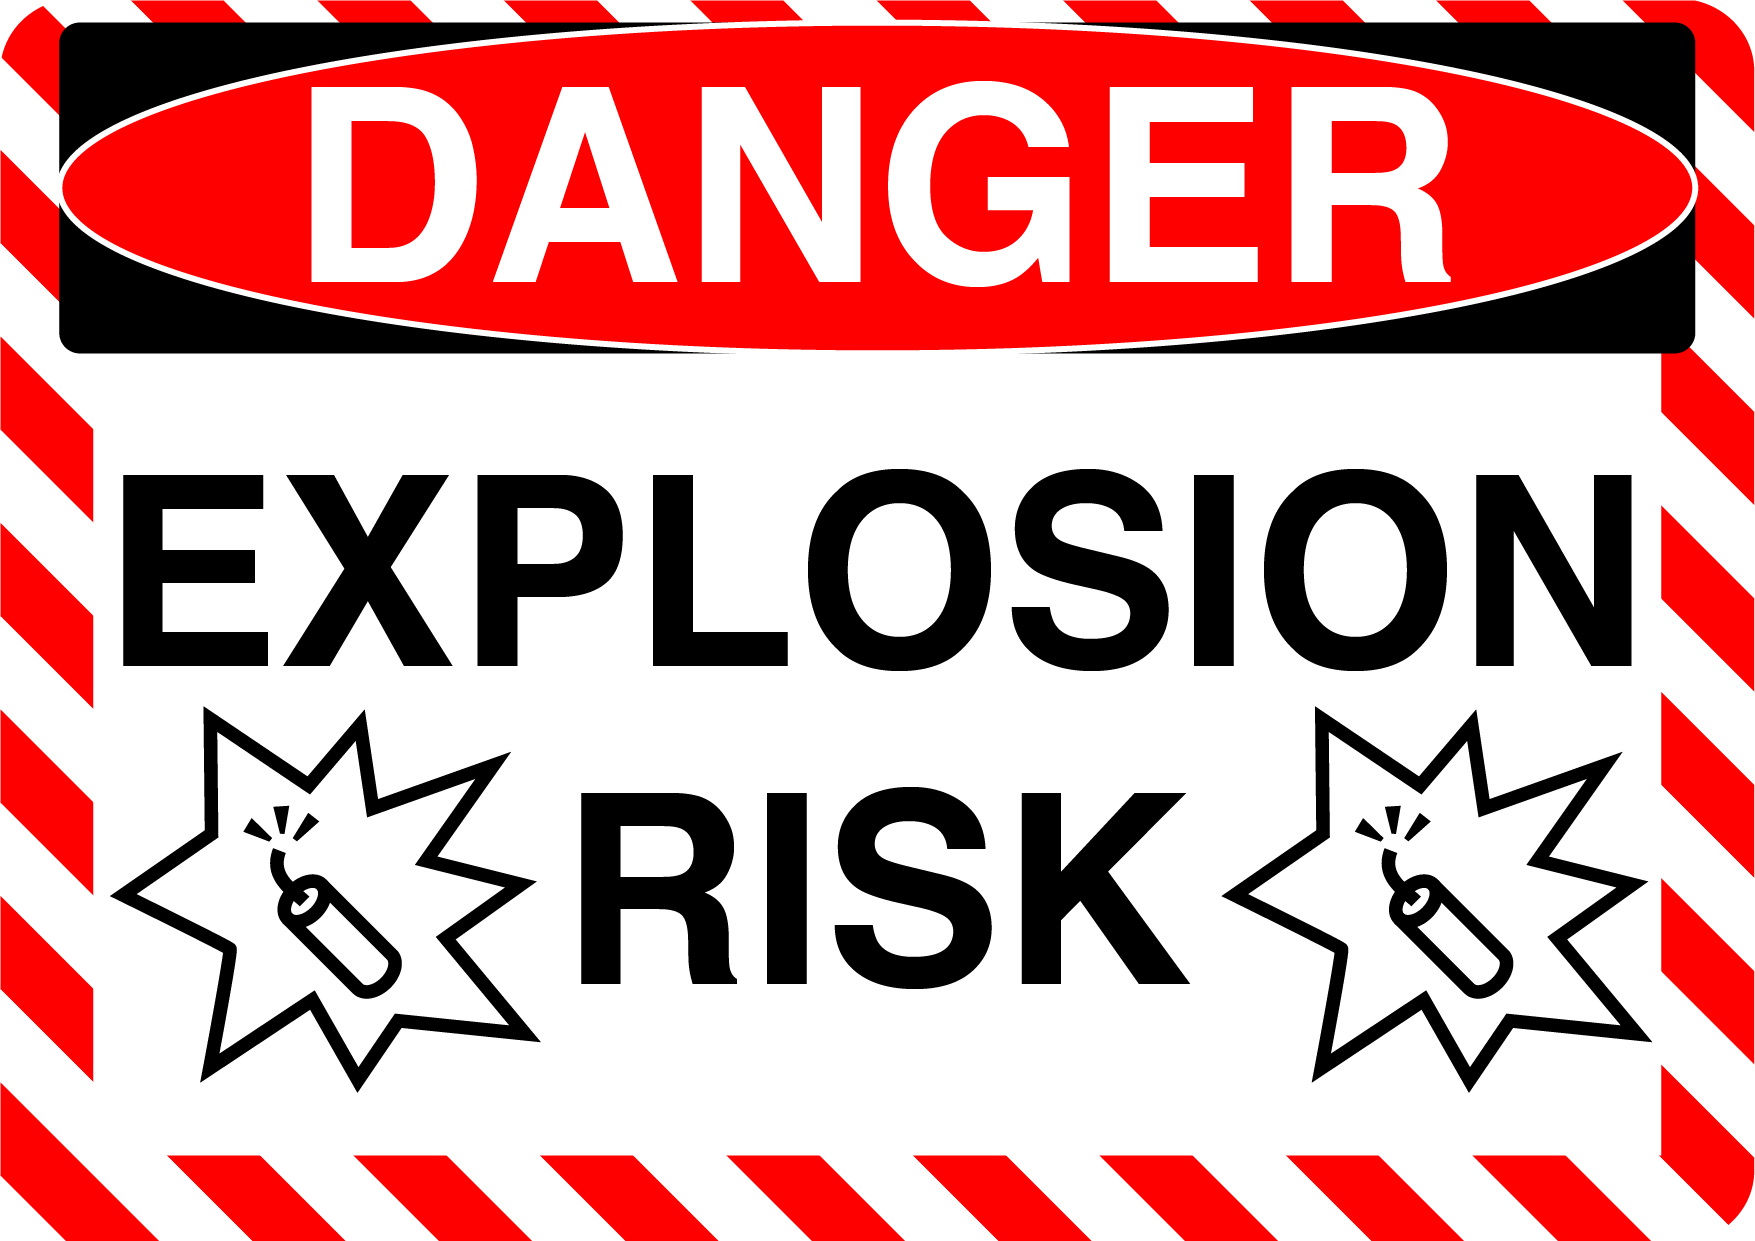 Danger "Explosion Risk" Version 2, Durable Matte Laminated Vinyl Floor Sign- Various Sizes Available